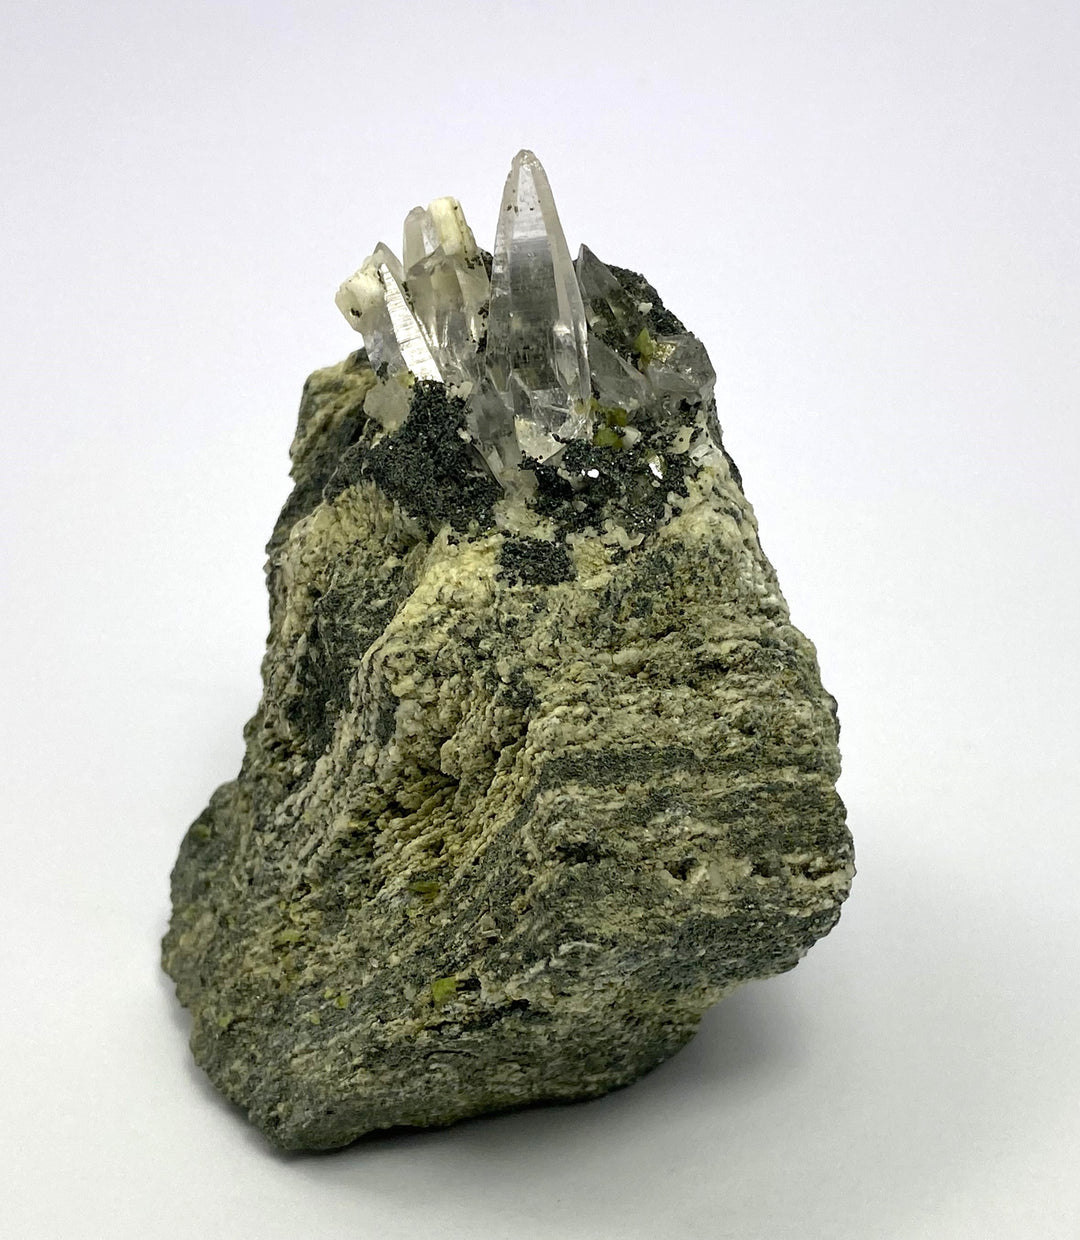 Rock crystal, Periklin, Sphen, Dösental, Mallnitz, Spittal an der Drau, Carinthia